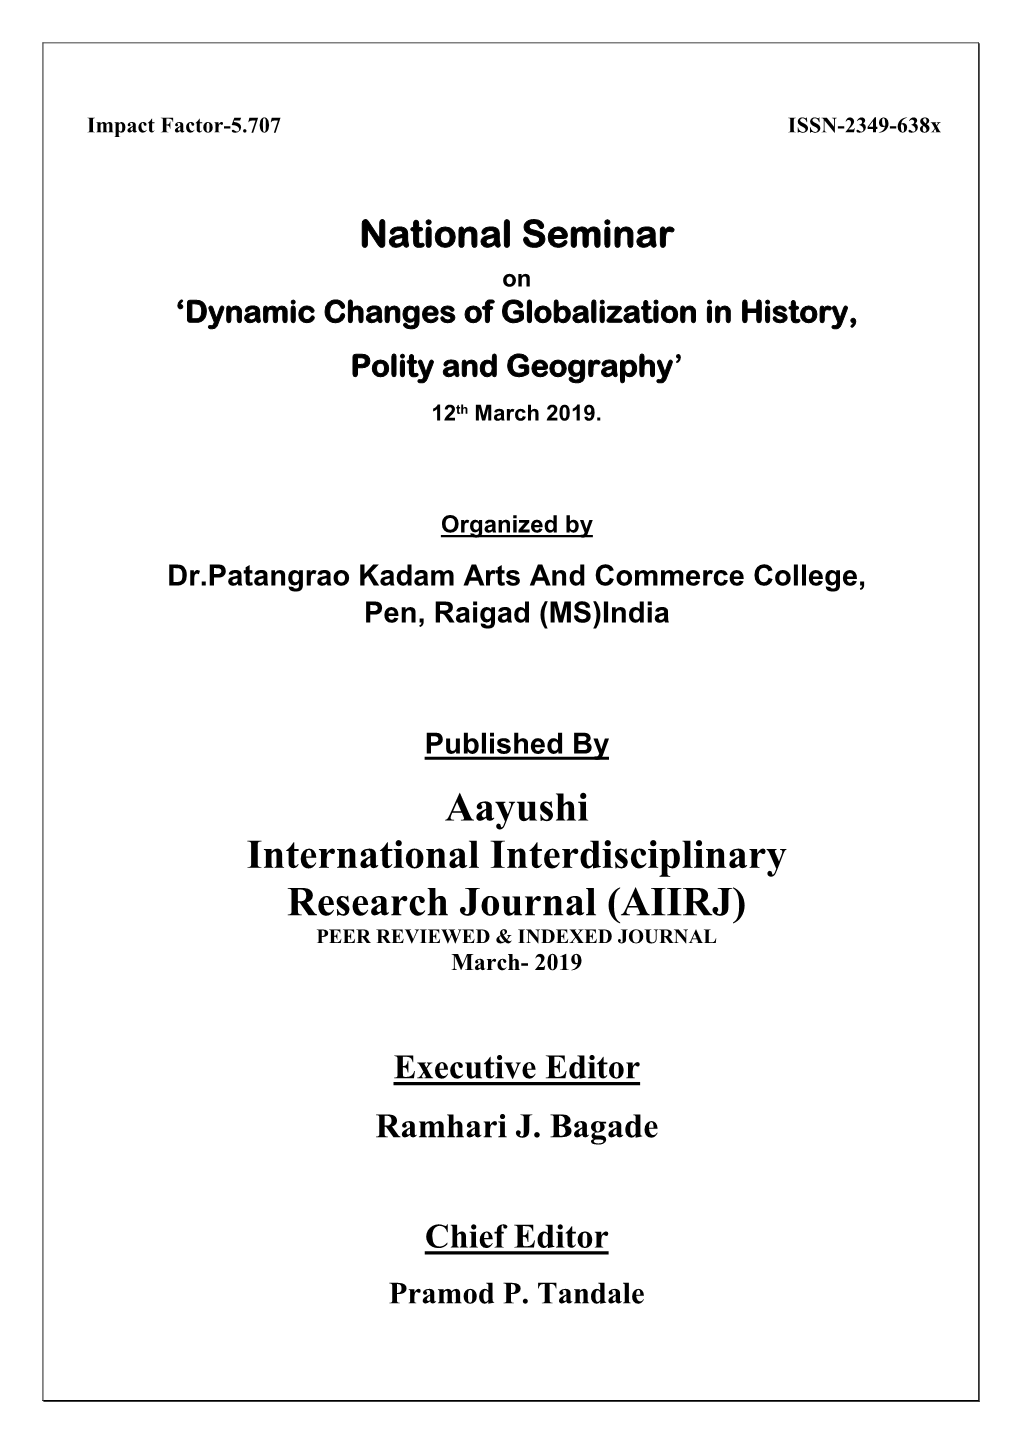 Aayushi International Interdisciplinary Research Journal (AIIRJ) PEER REVIEWED & INDEXED JOURNAL March- 2019